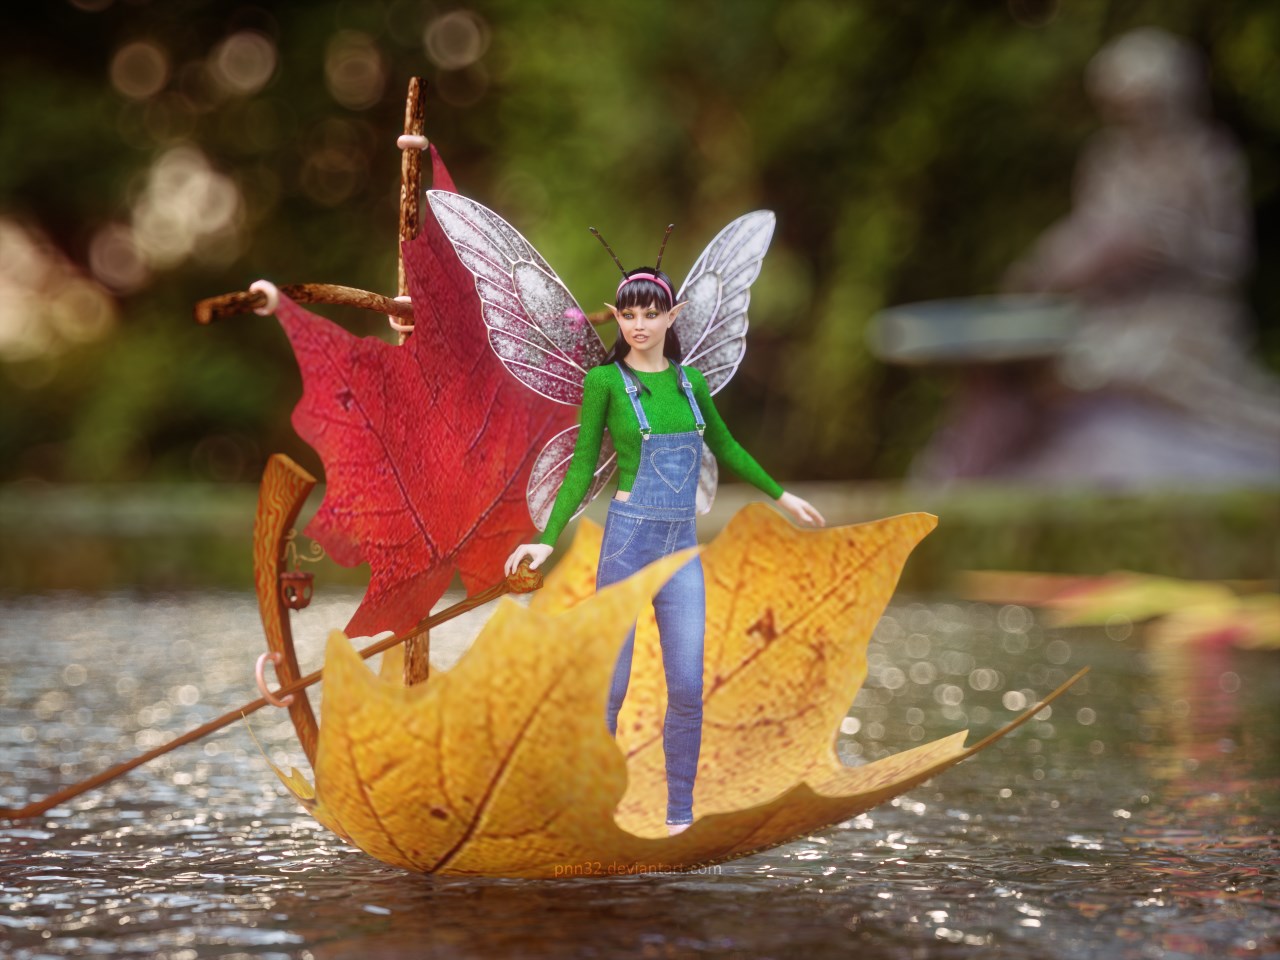 Tiny sailing on autumn leaf